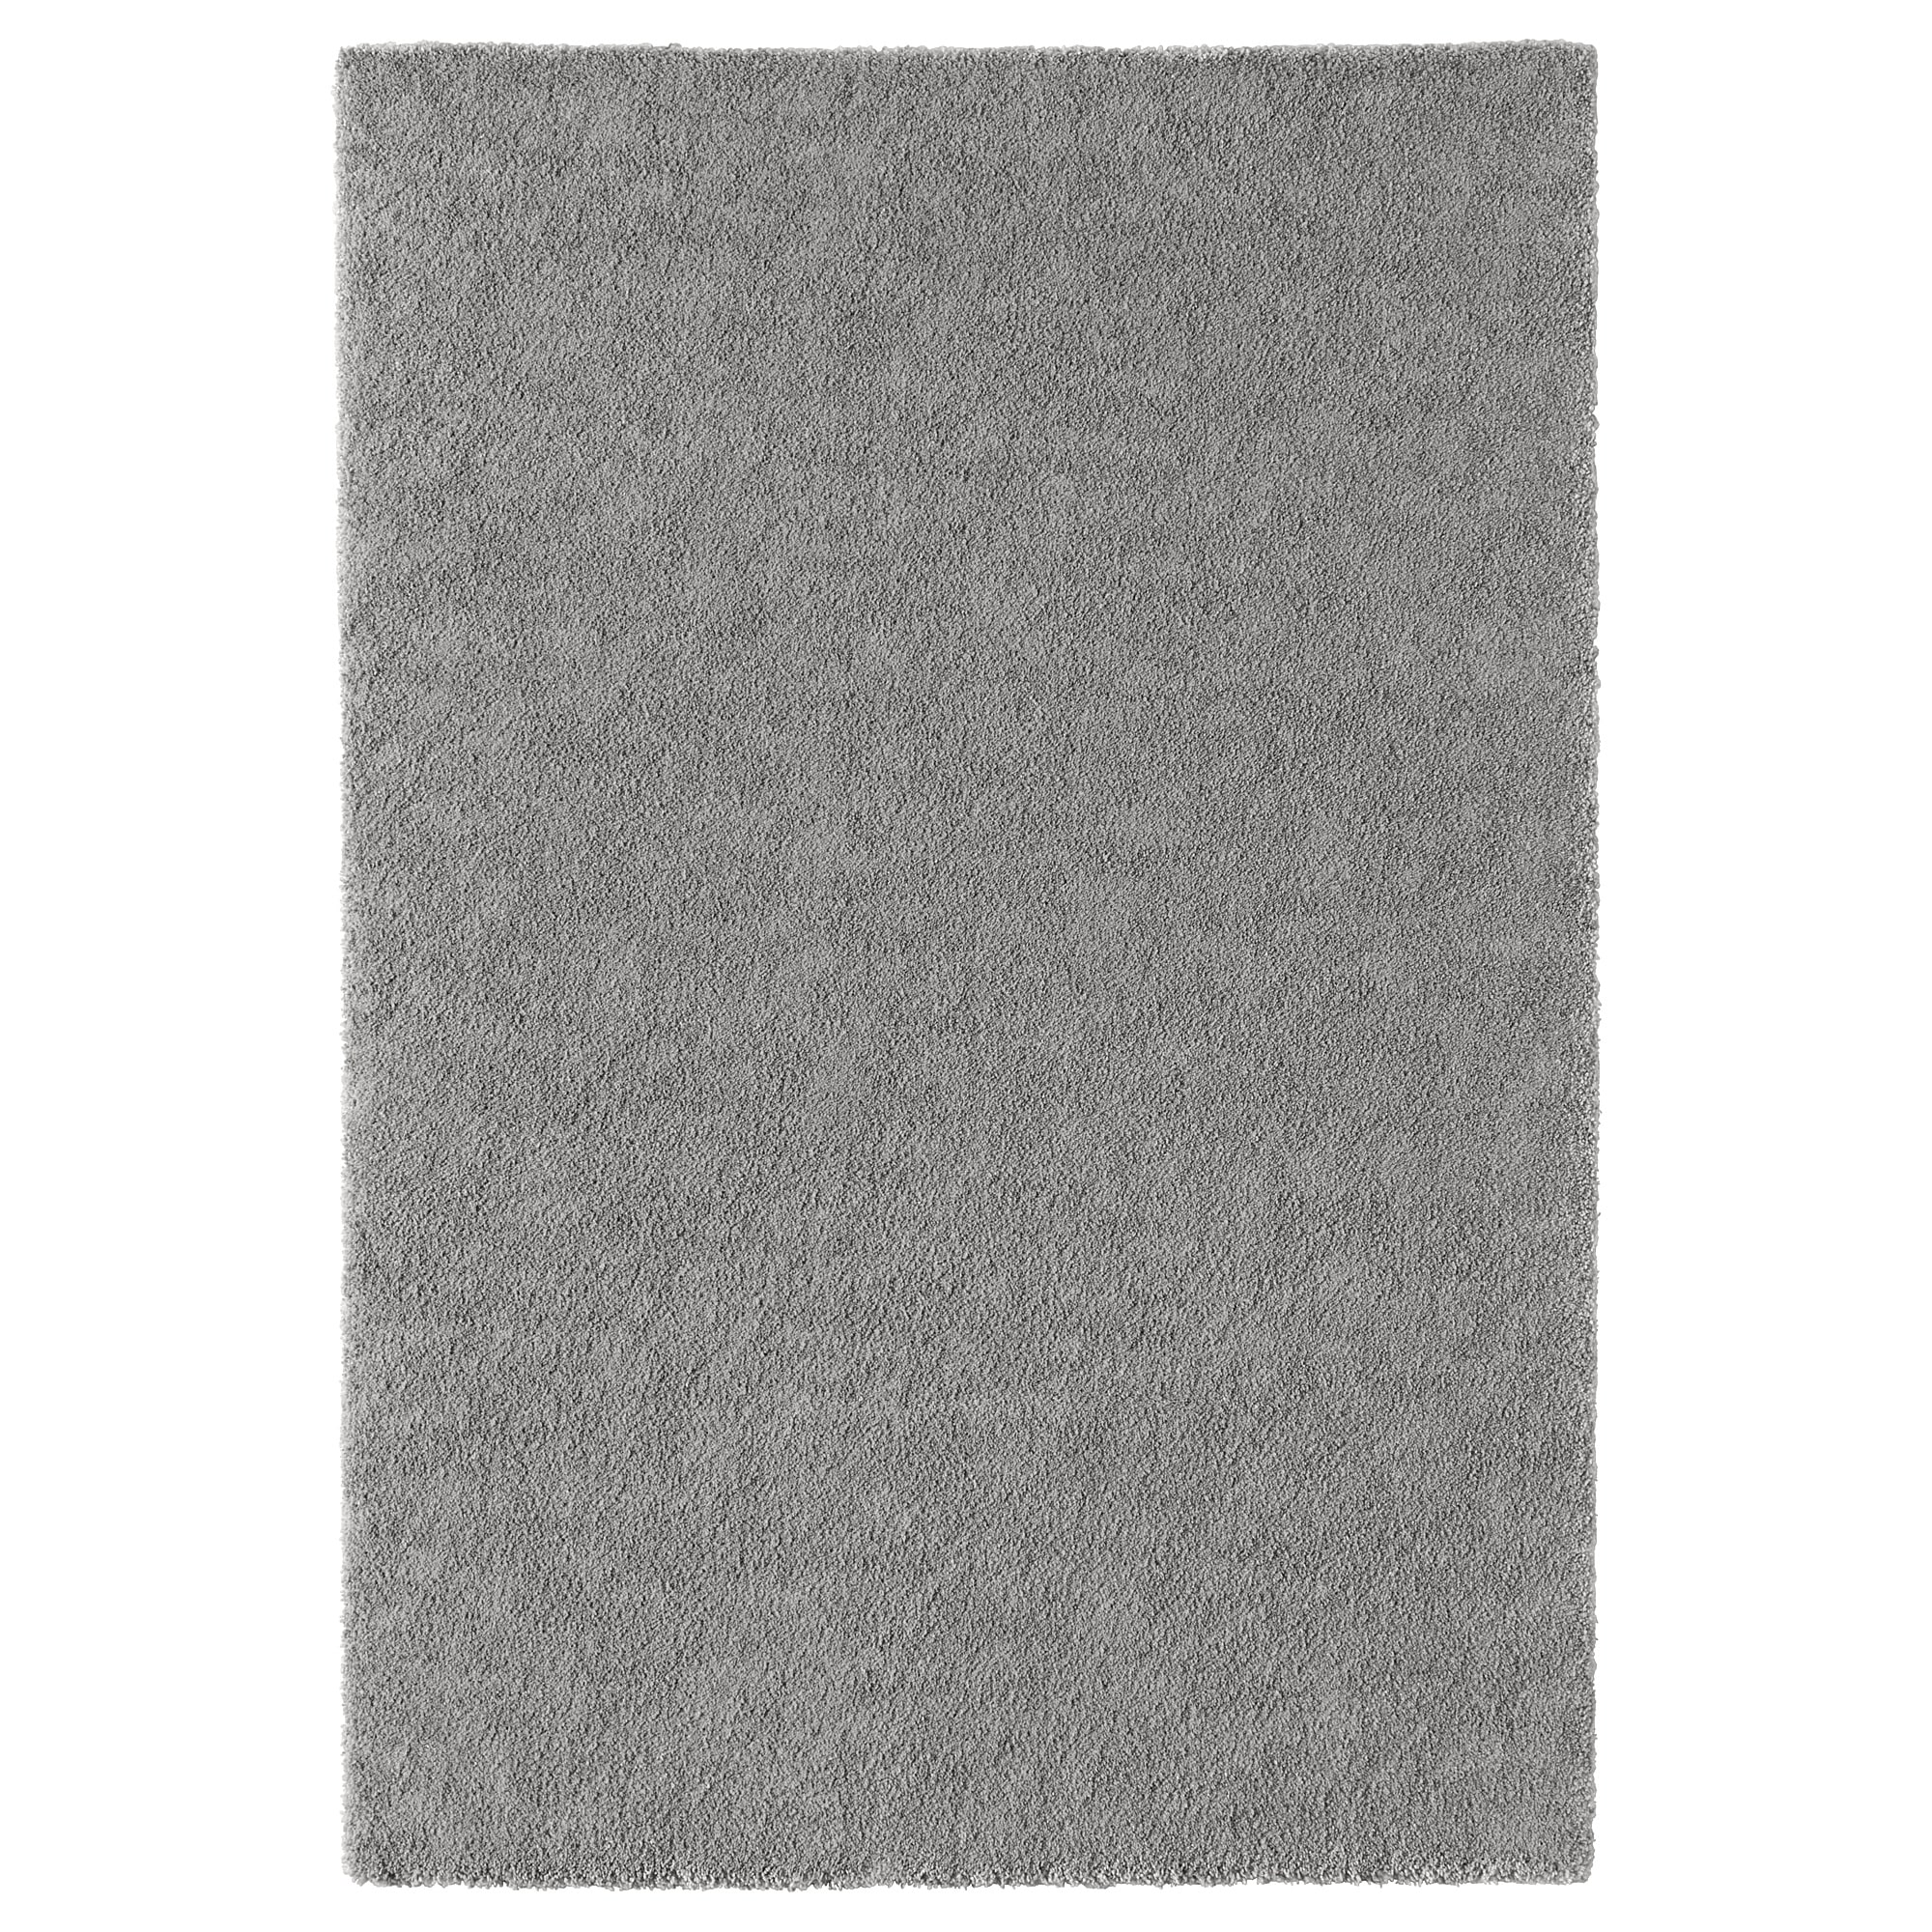 STOENSE off-white, Rug, low pile, 133x195 cm - IKEA